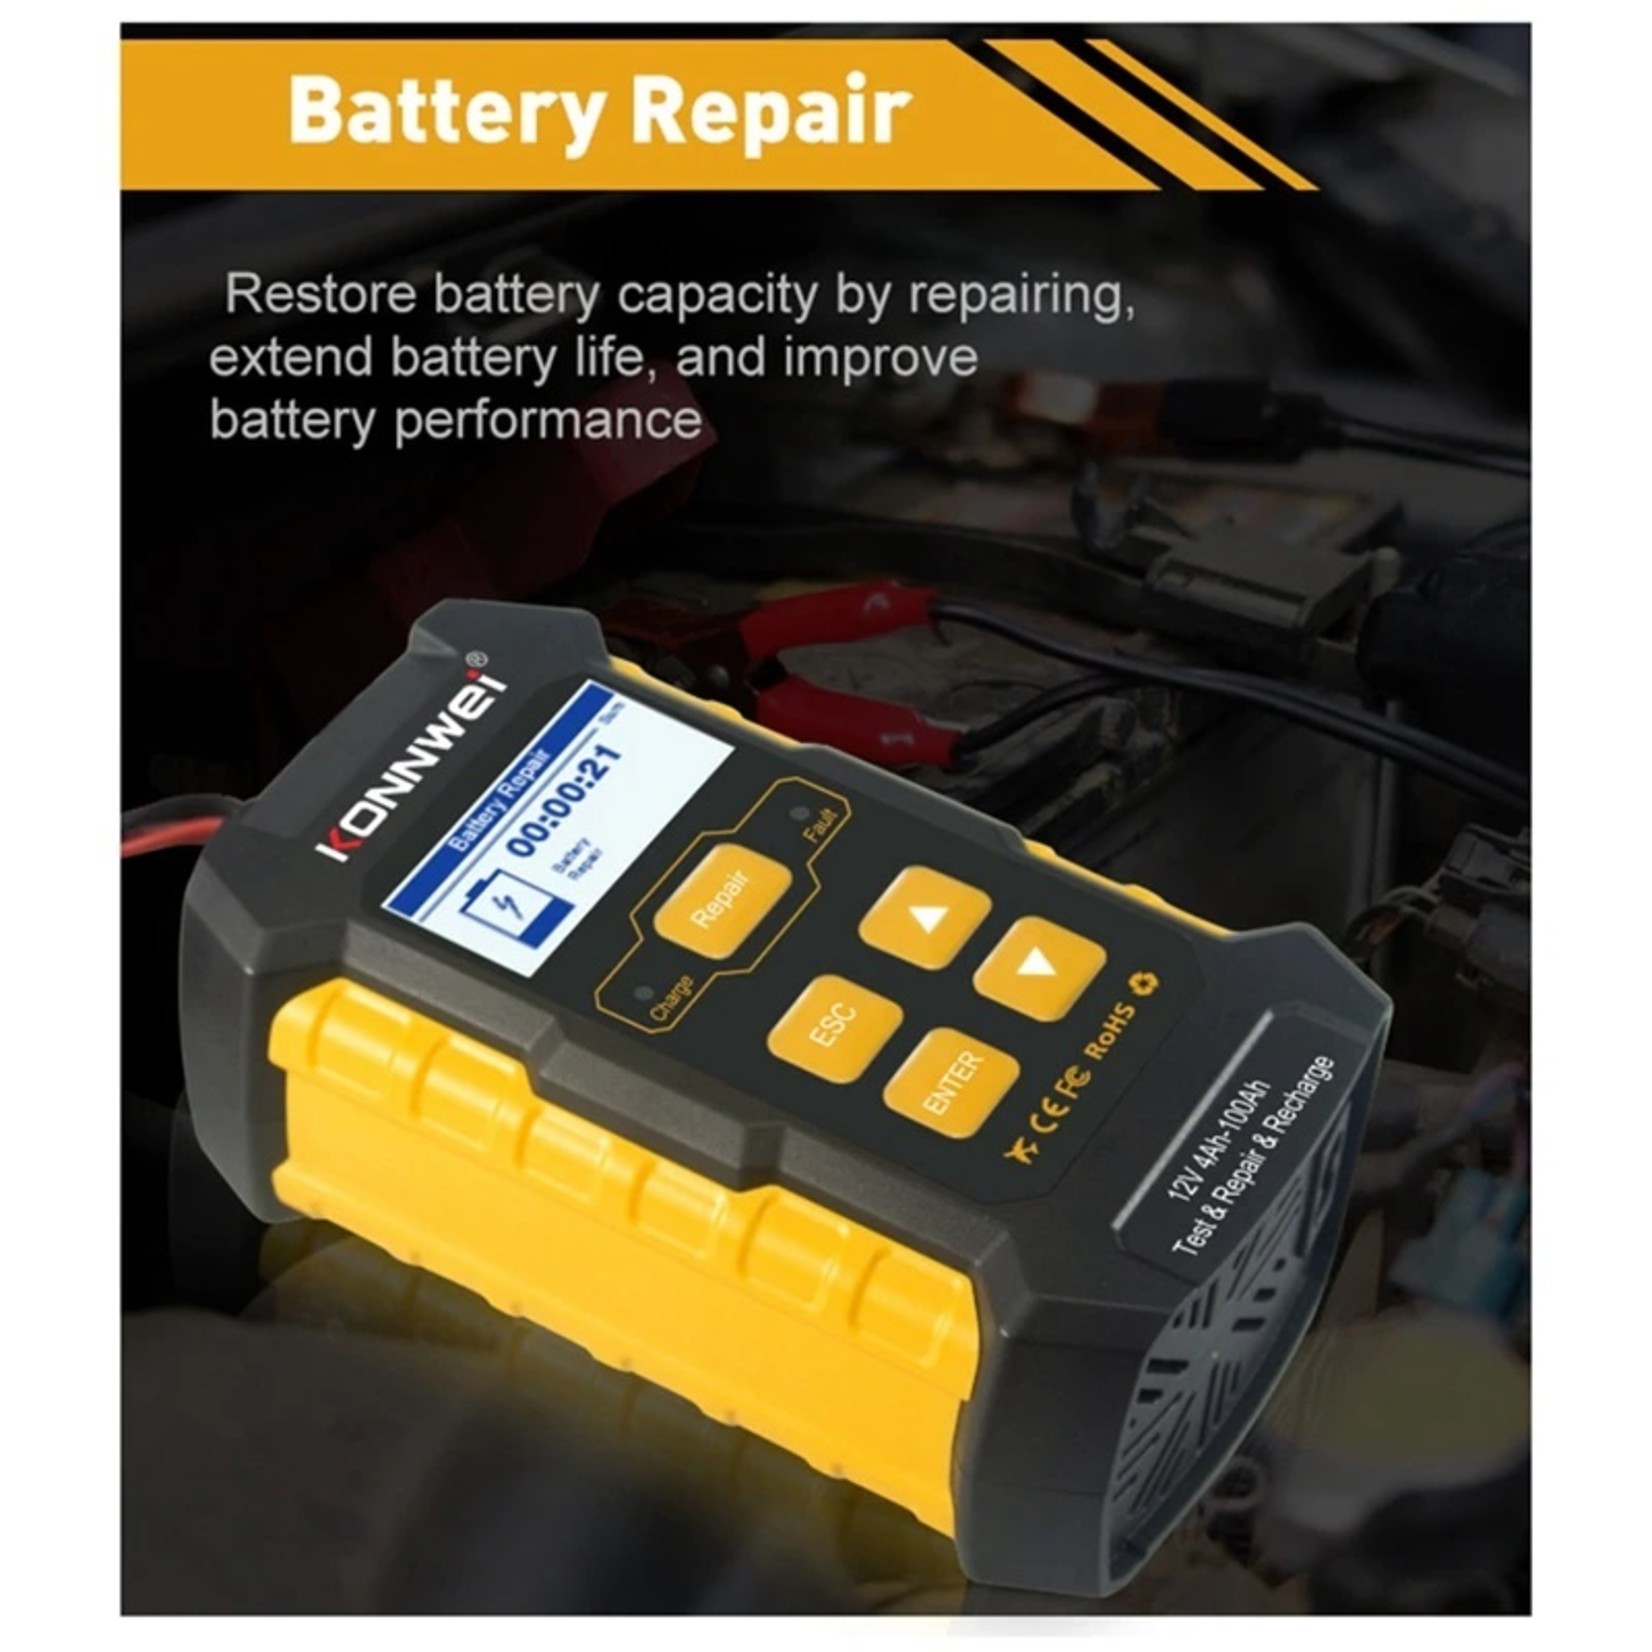 KONNWEI KONNWEI KW510 Auto Batterij Analyzer met reparatie- en oplaad- en testfunctie